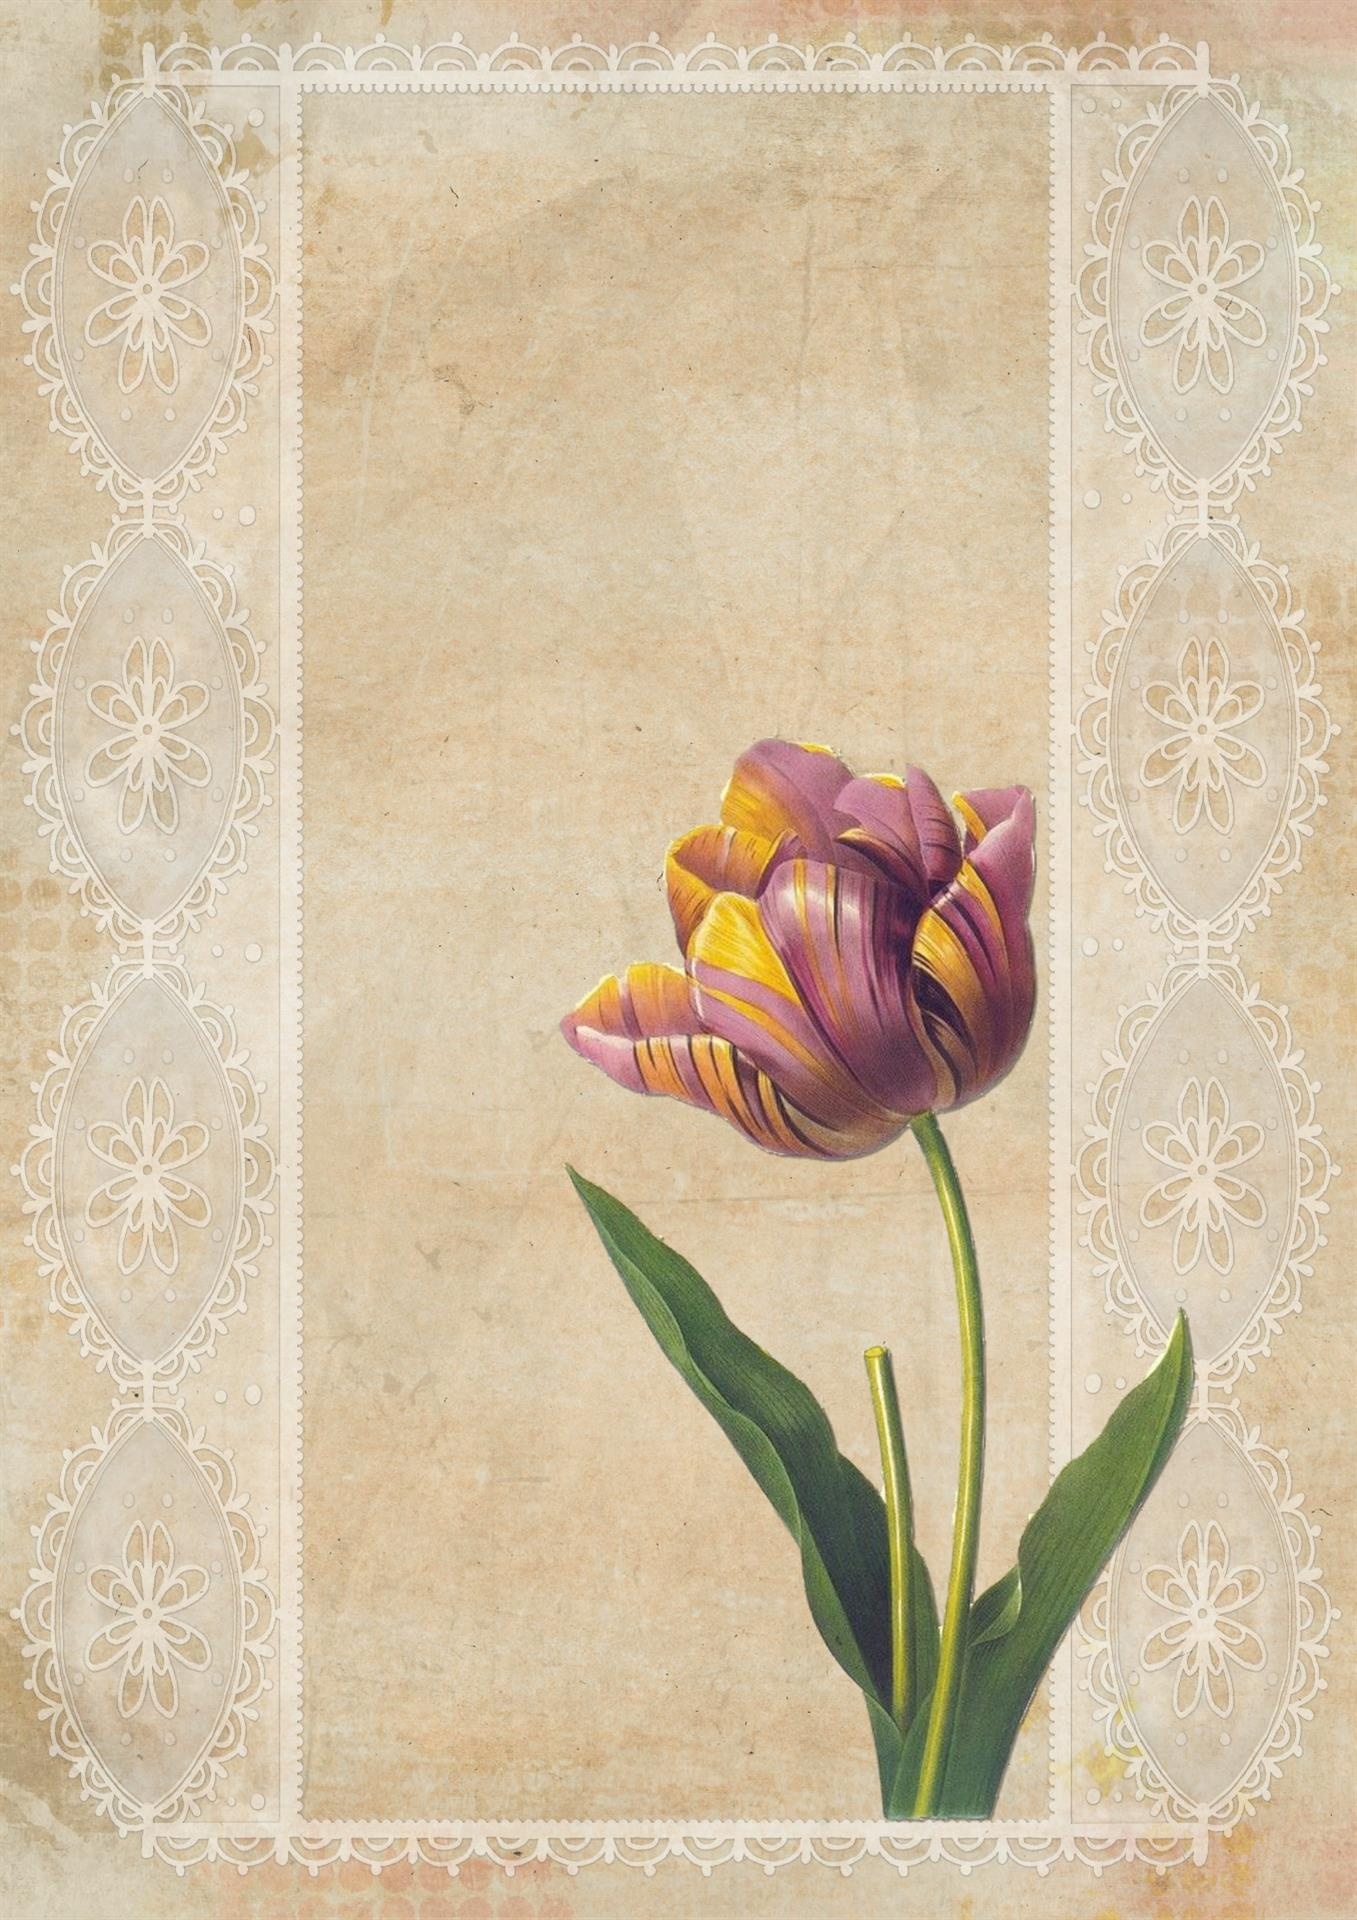 Collage de cosecha de flores de tulipán